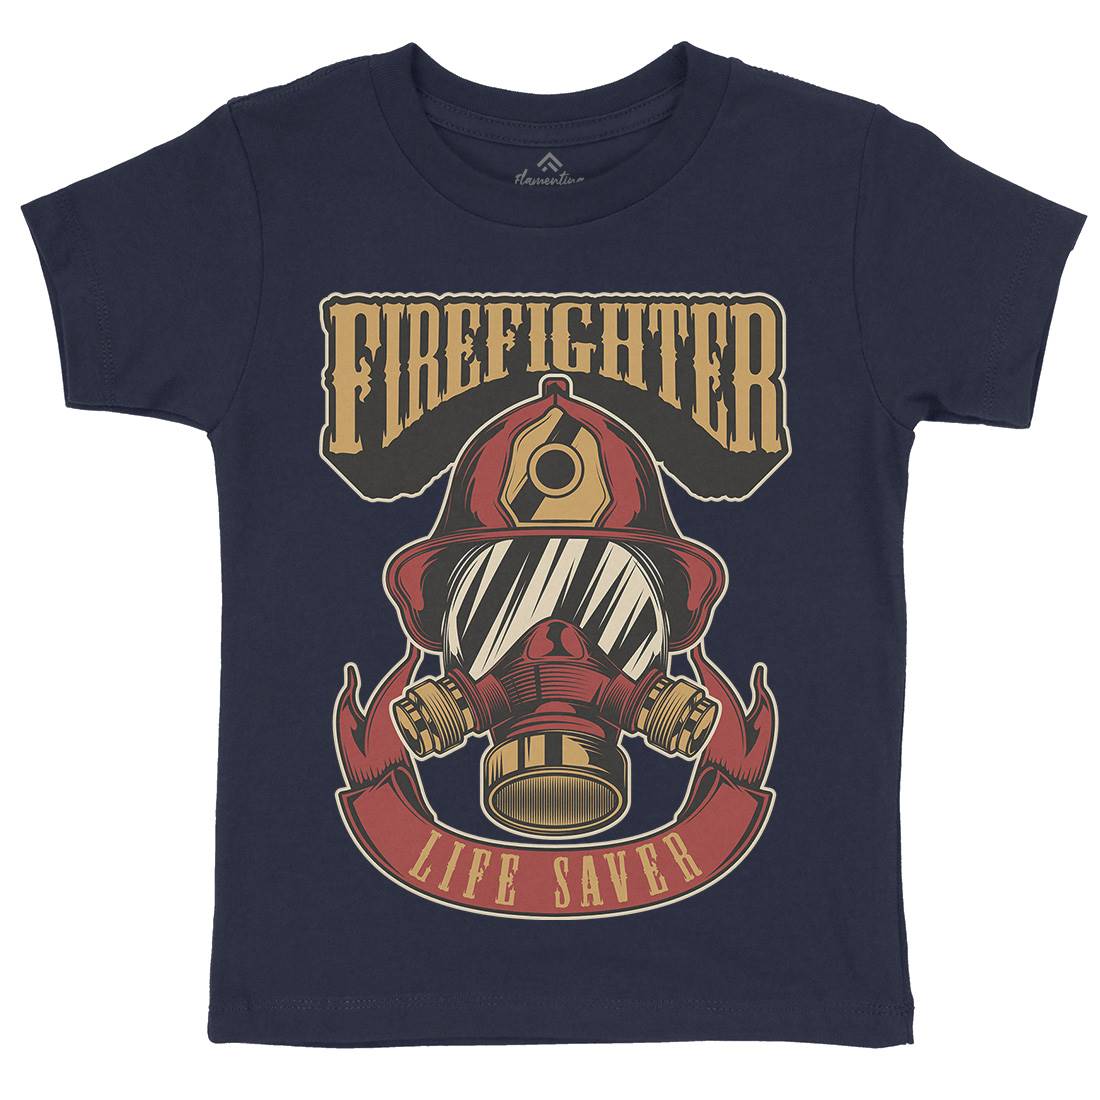 Life Saver Kids Organic Crew Neck T-Shirt Firefighters C827